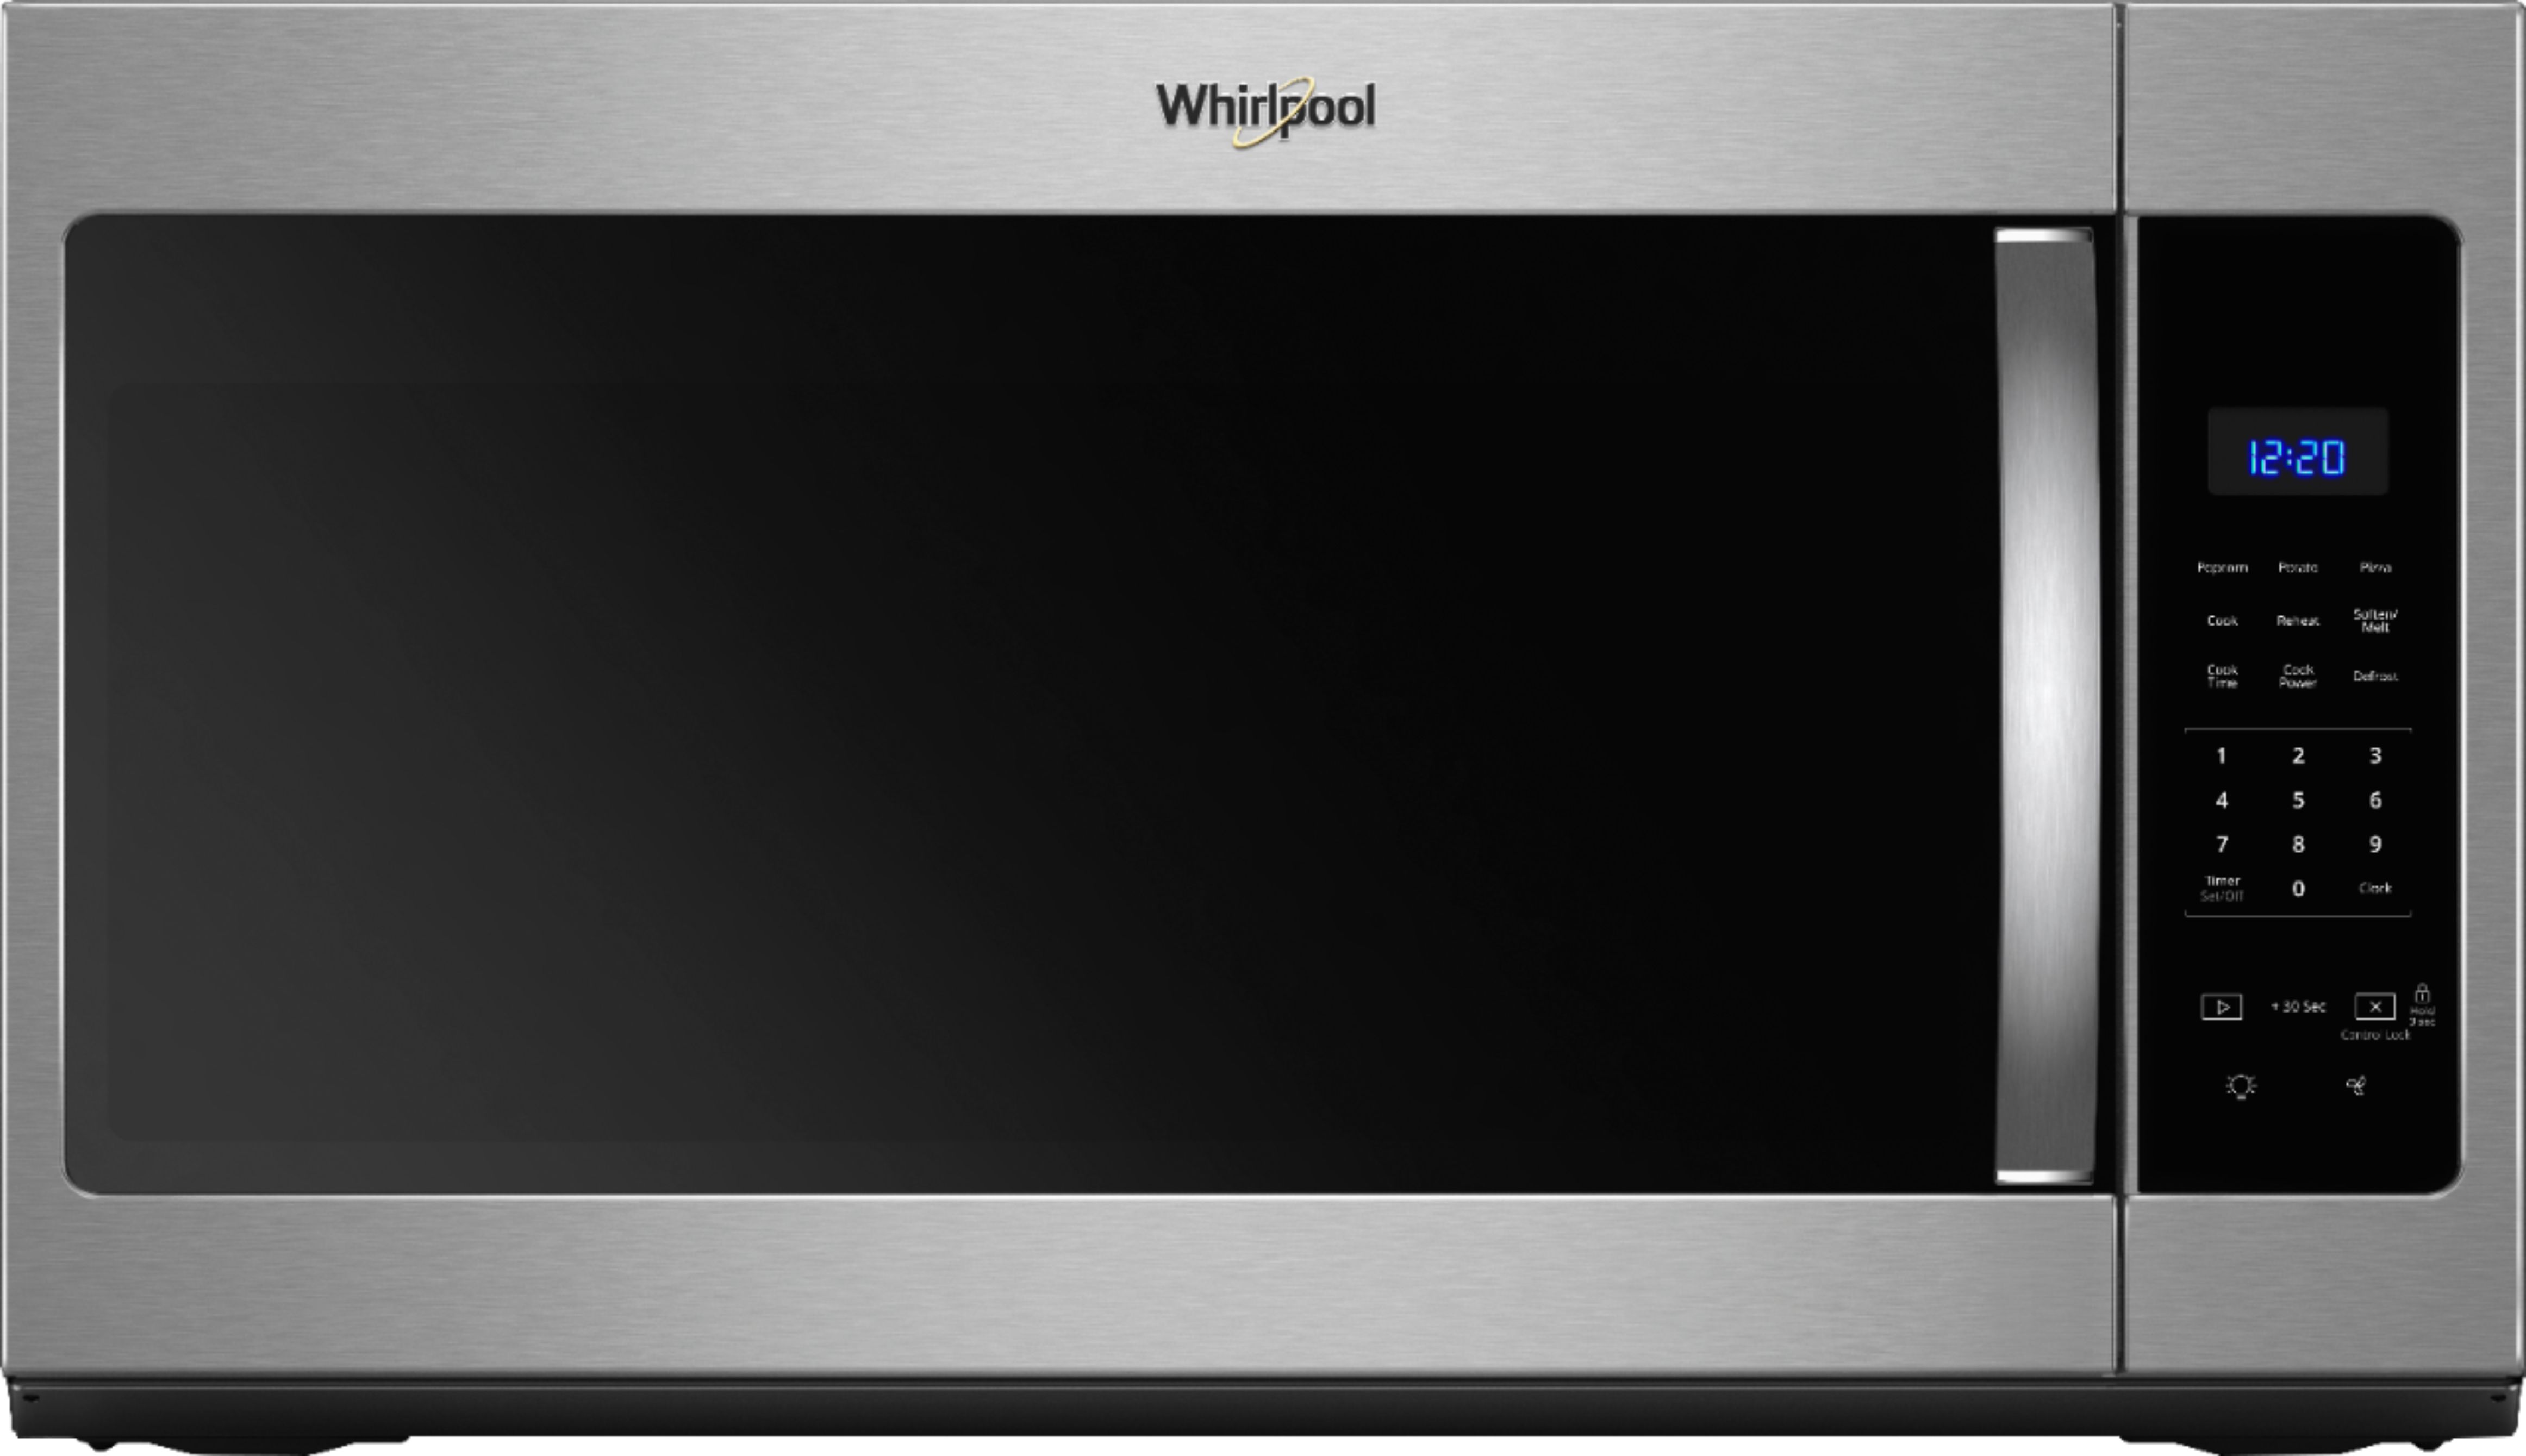 Whirlpool WMH31017AB 1000W Over-the-Range Microwave - 1.7 cu ft - Black